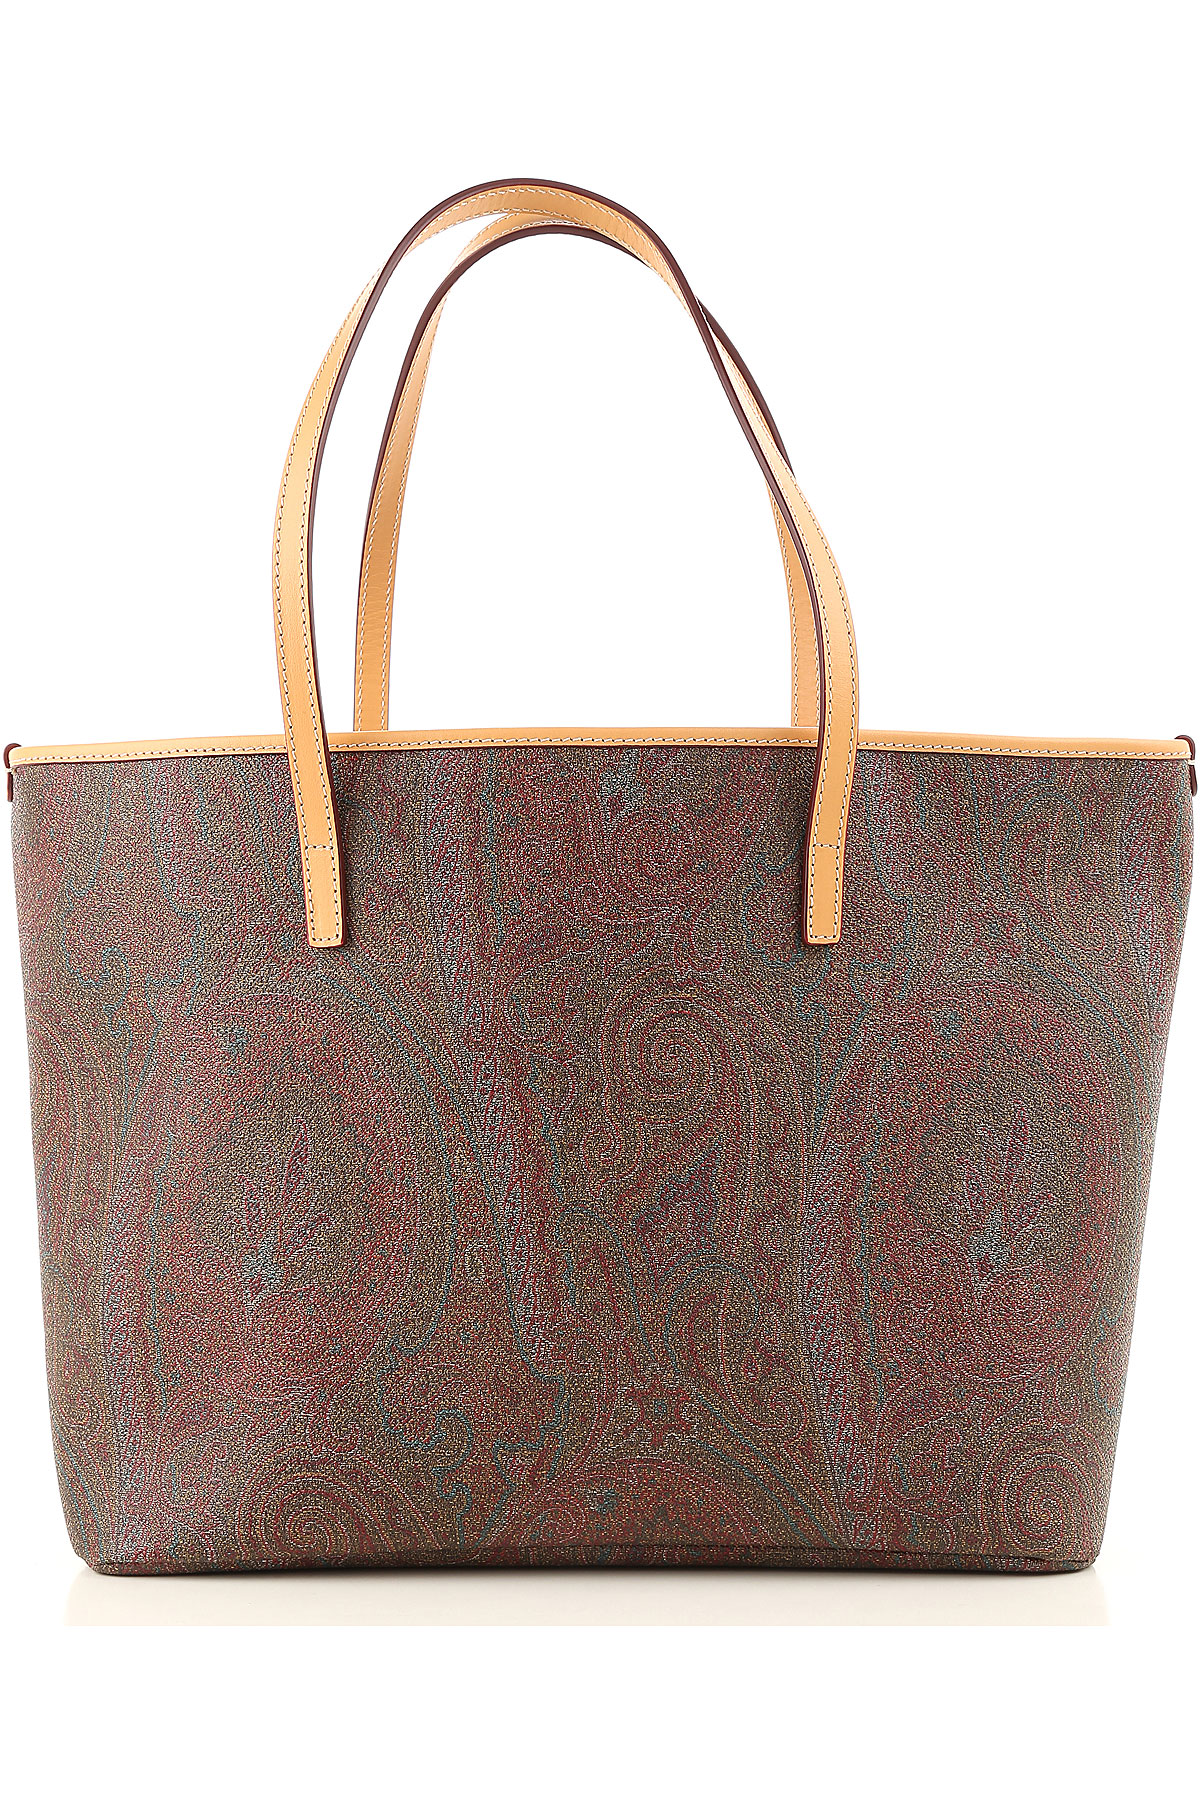 Handbags Etro, Style code: 0d088-8010-600